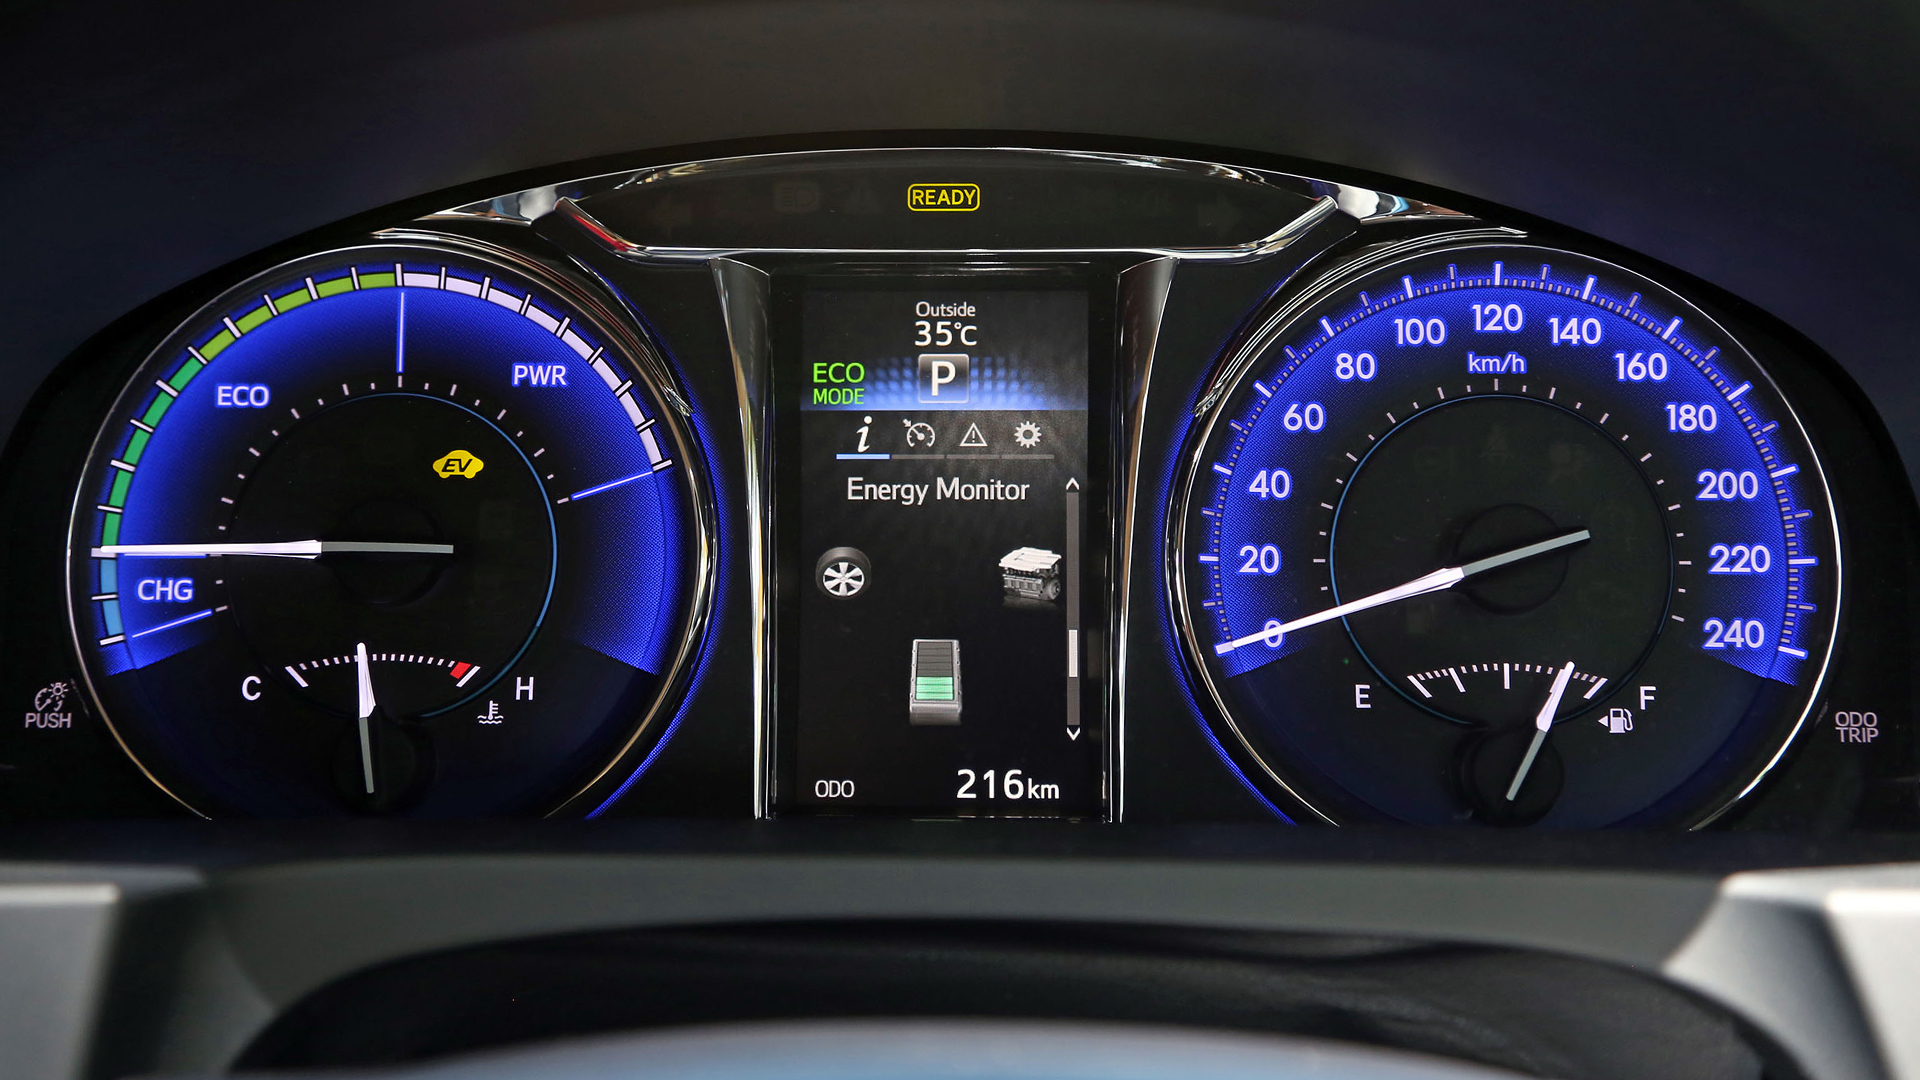 Toyota Camry 2015 Hybrid Interior Car Photos Overdrive